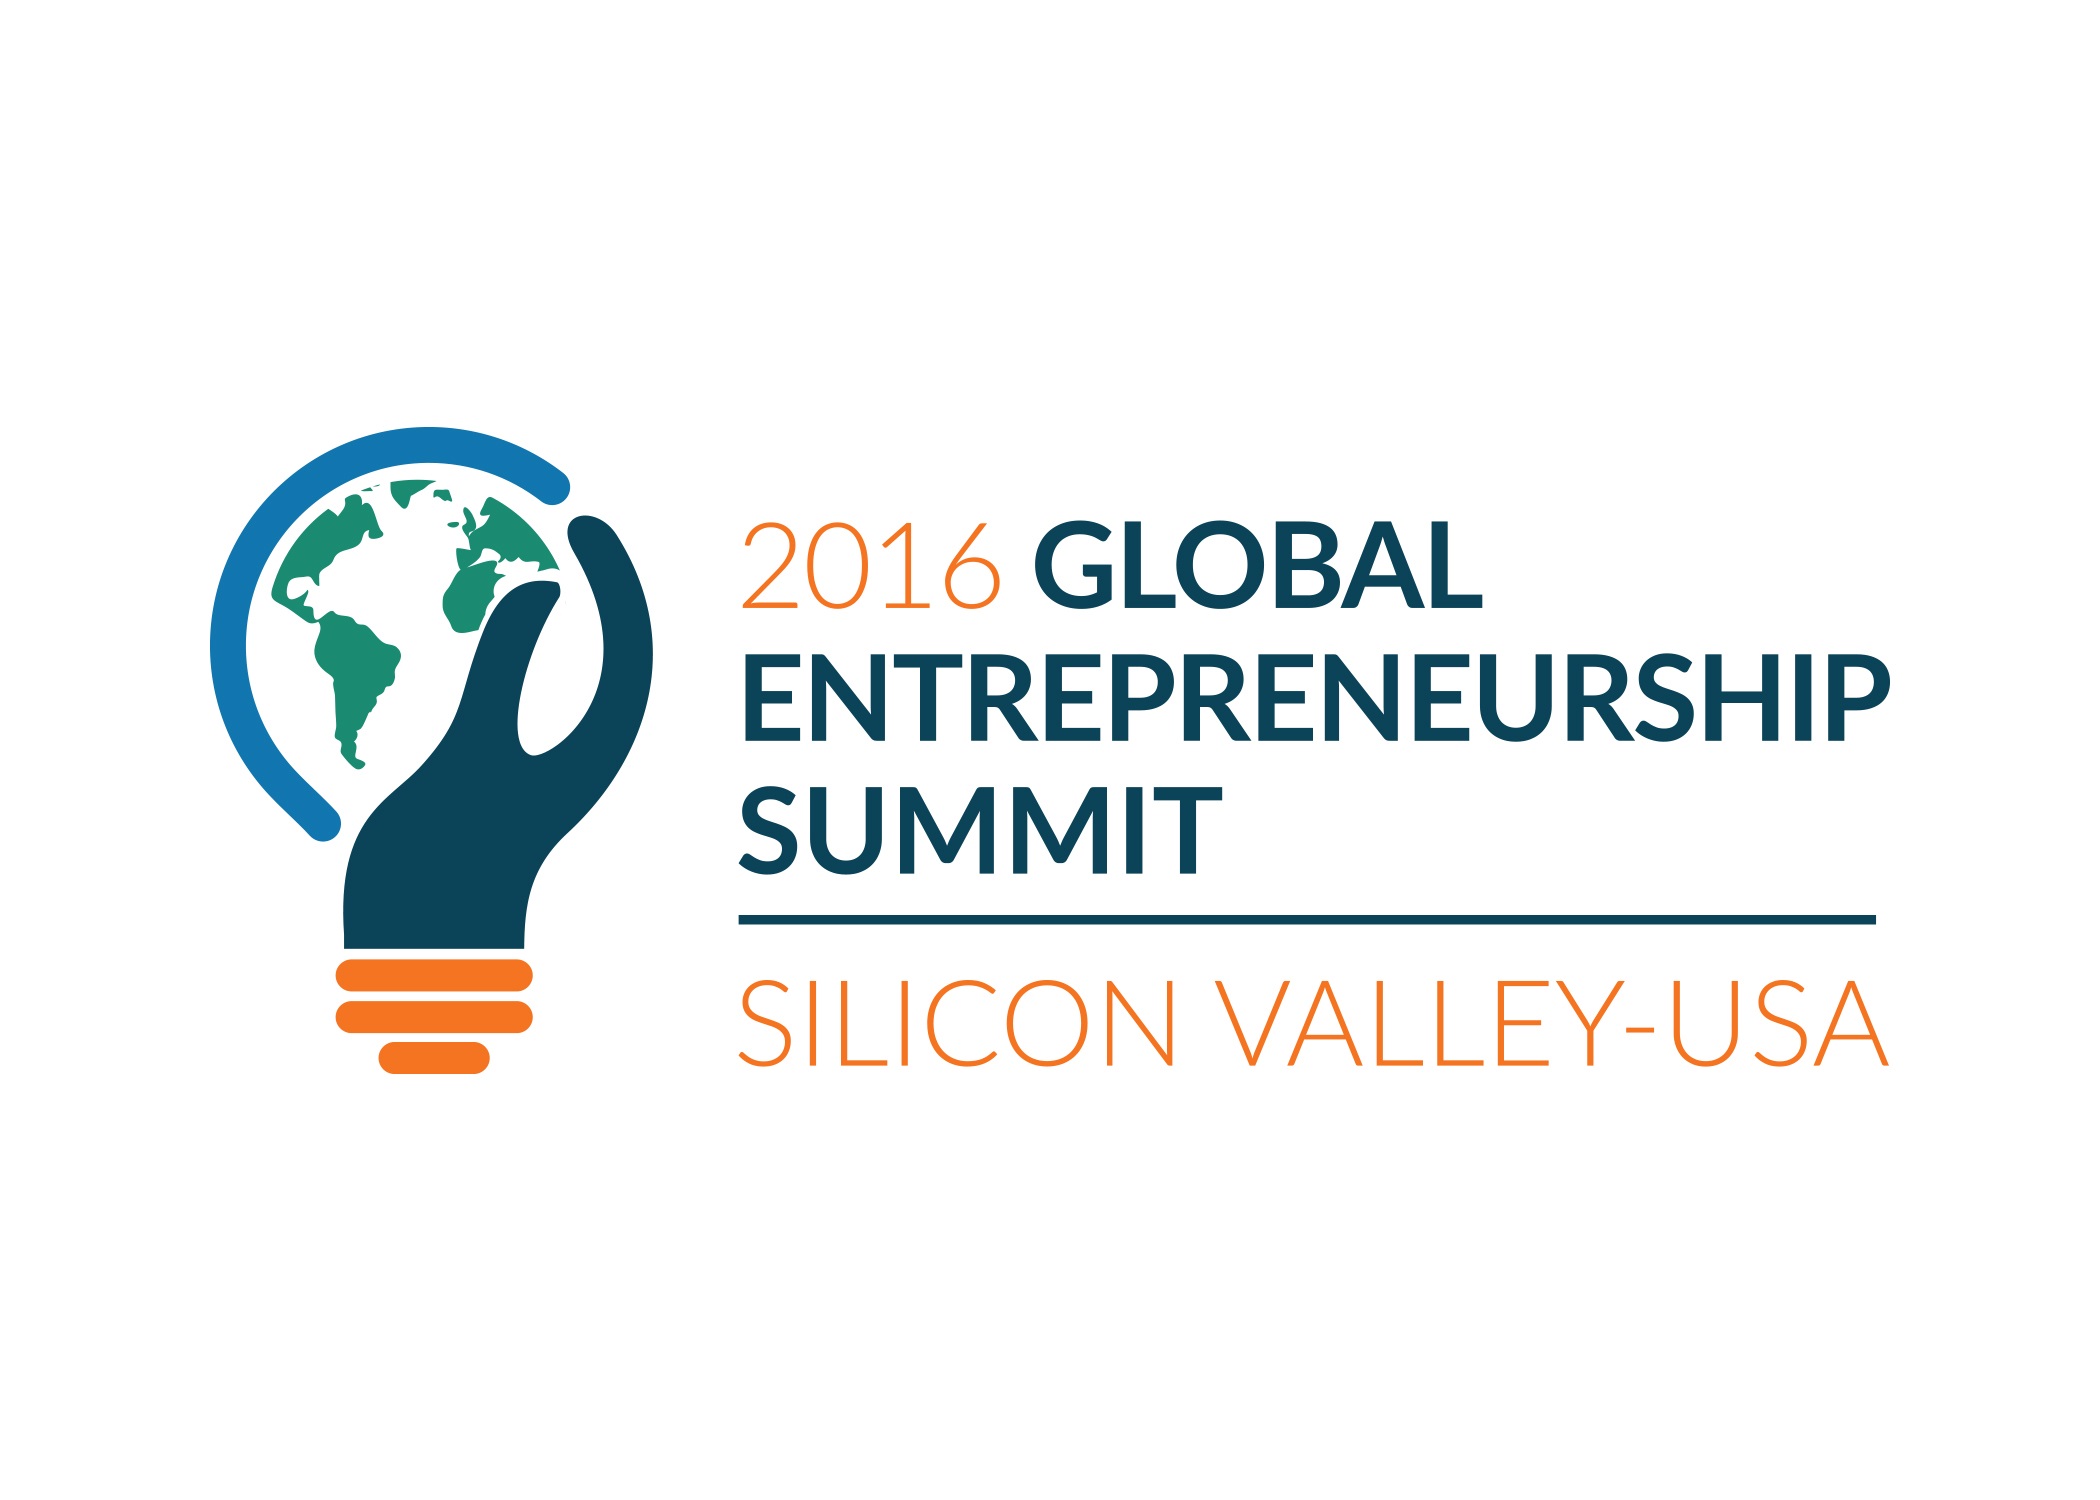 2016 global entrepreneurship summit